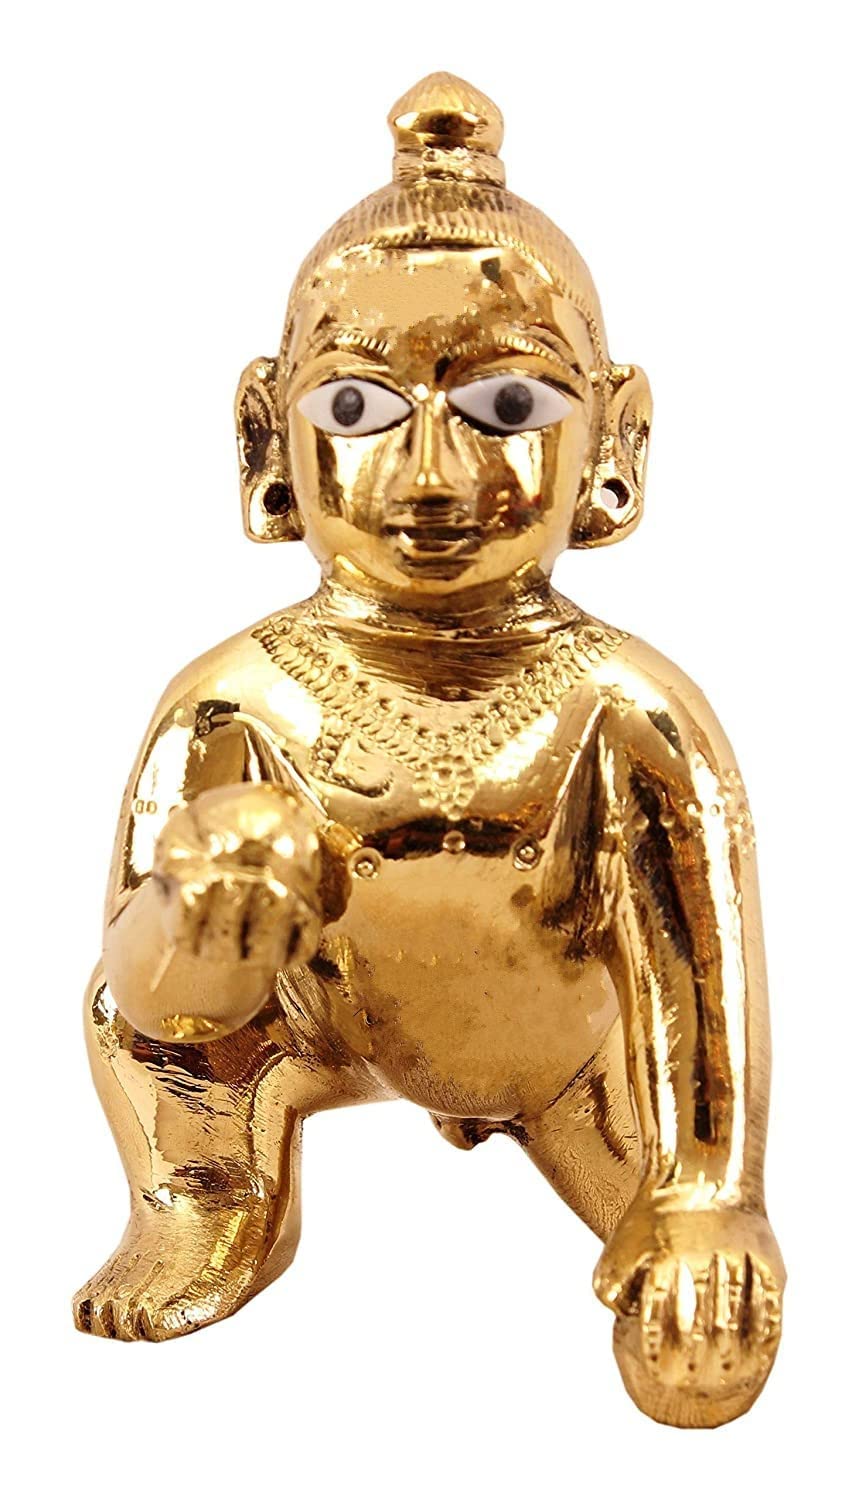 Pujahome Laddu Gopal Idol/Bal Gopal/Thakur Ji Metal Murti ) Made in Vrindavan - Size 2